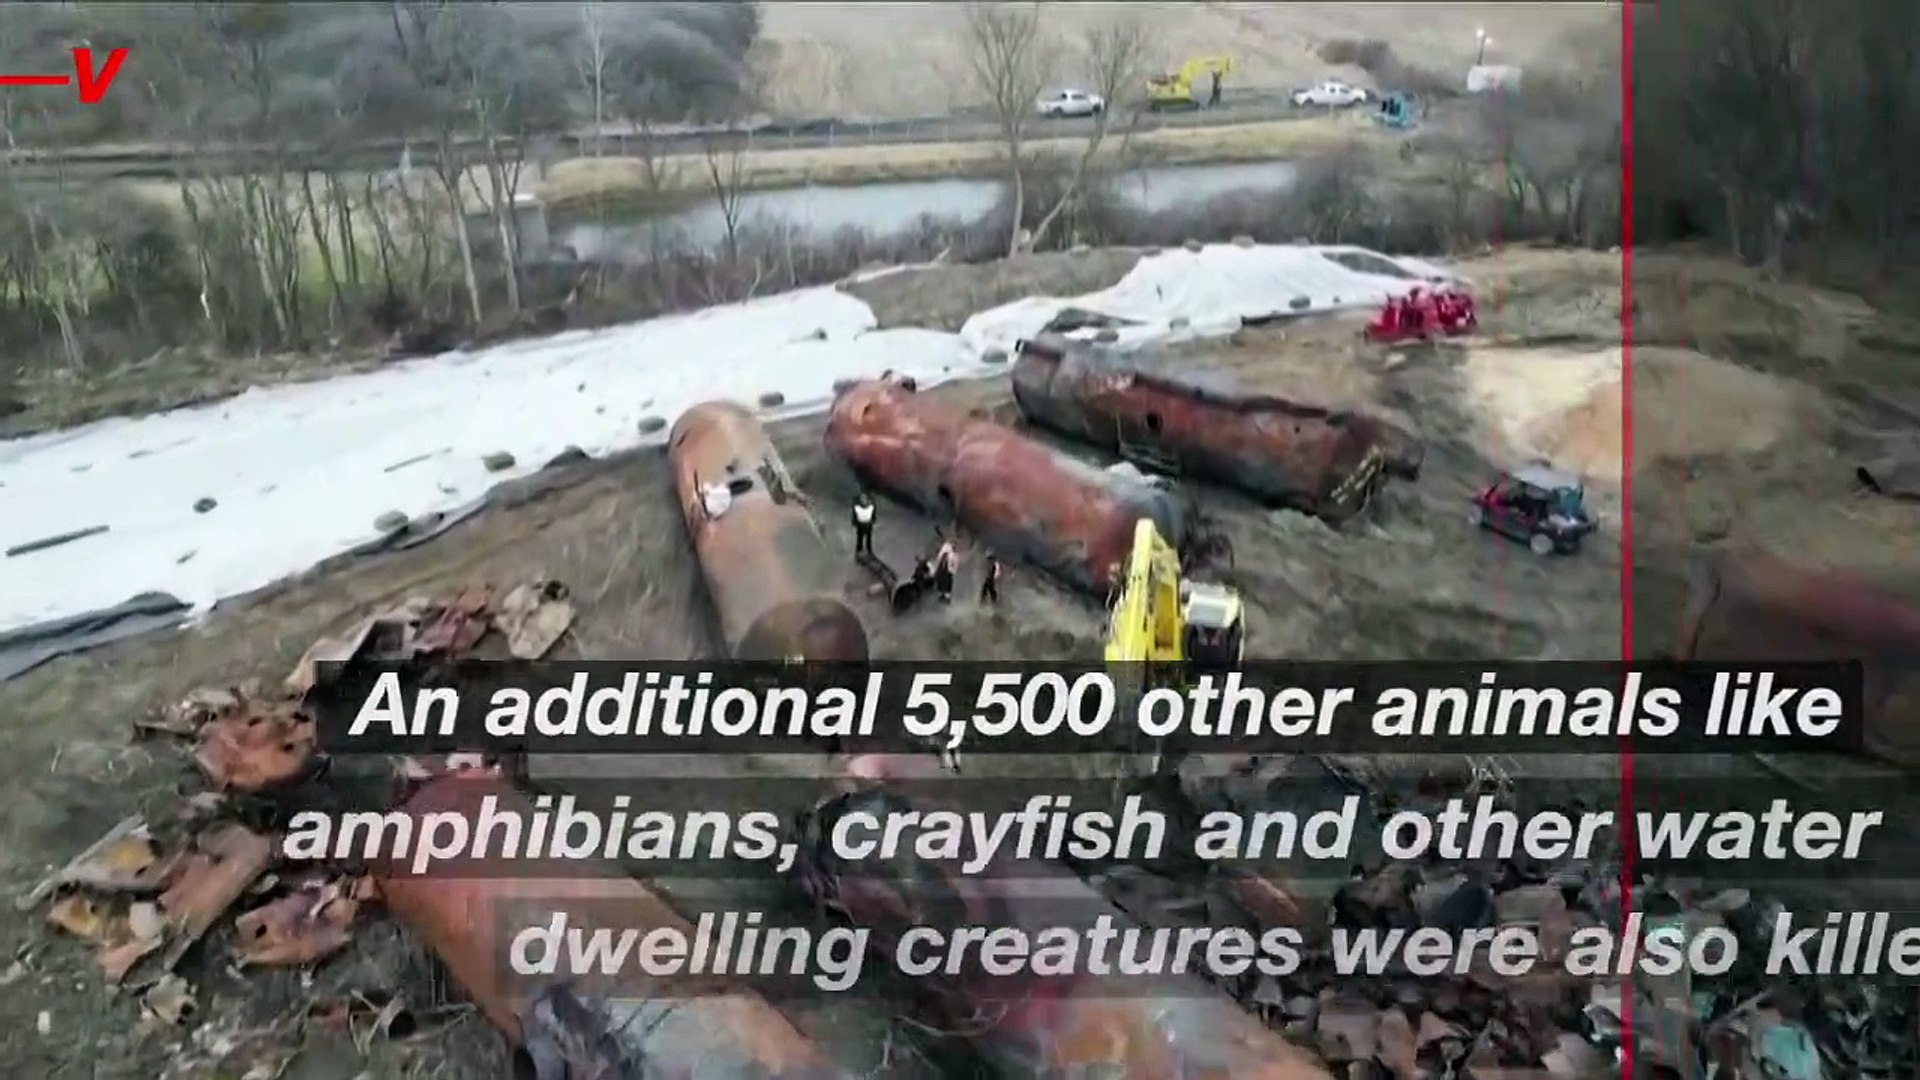 Ohio Train Derailment Responsible for More Than 44,000 Animal Deaths So Far  - video Dailymotion